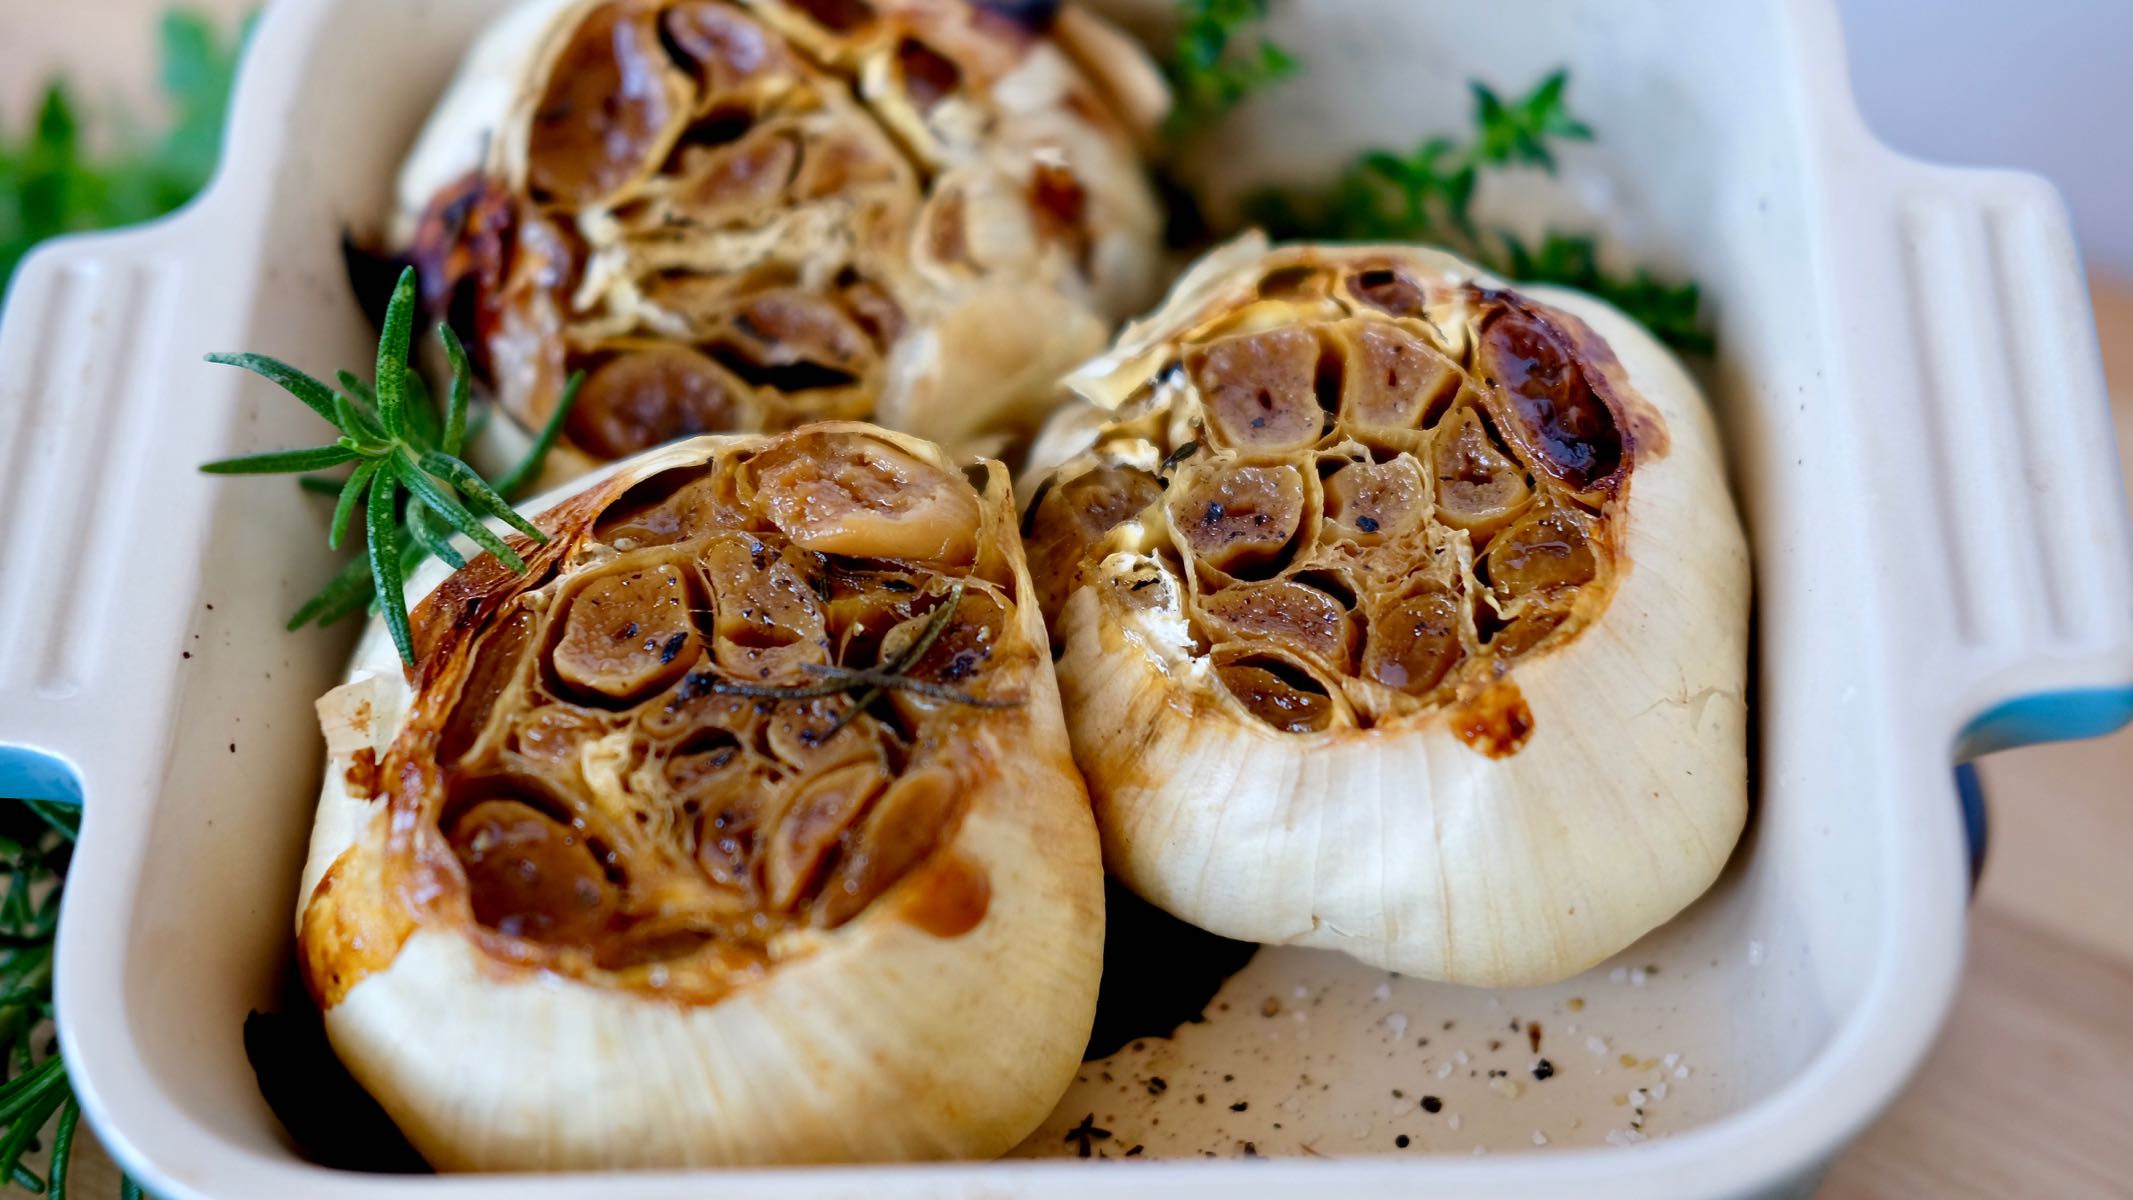 Roasted Garlic in roasting dish